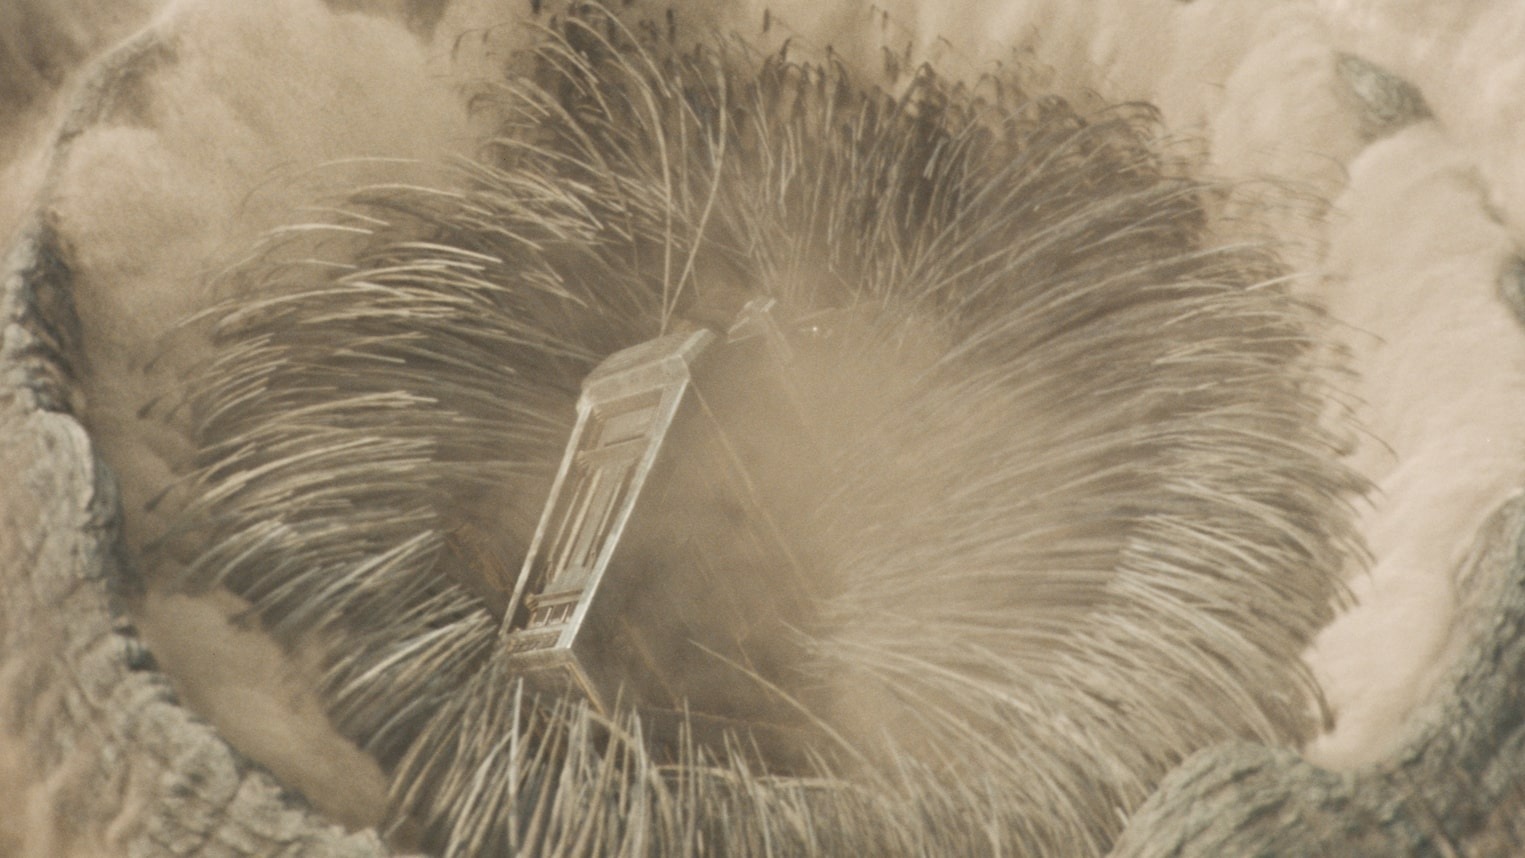 Dune's sandworms presented a particular VFX challenge